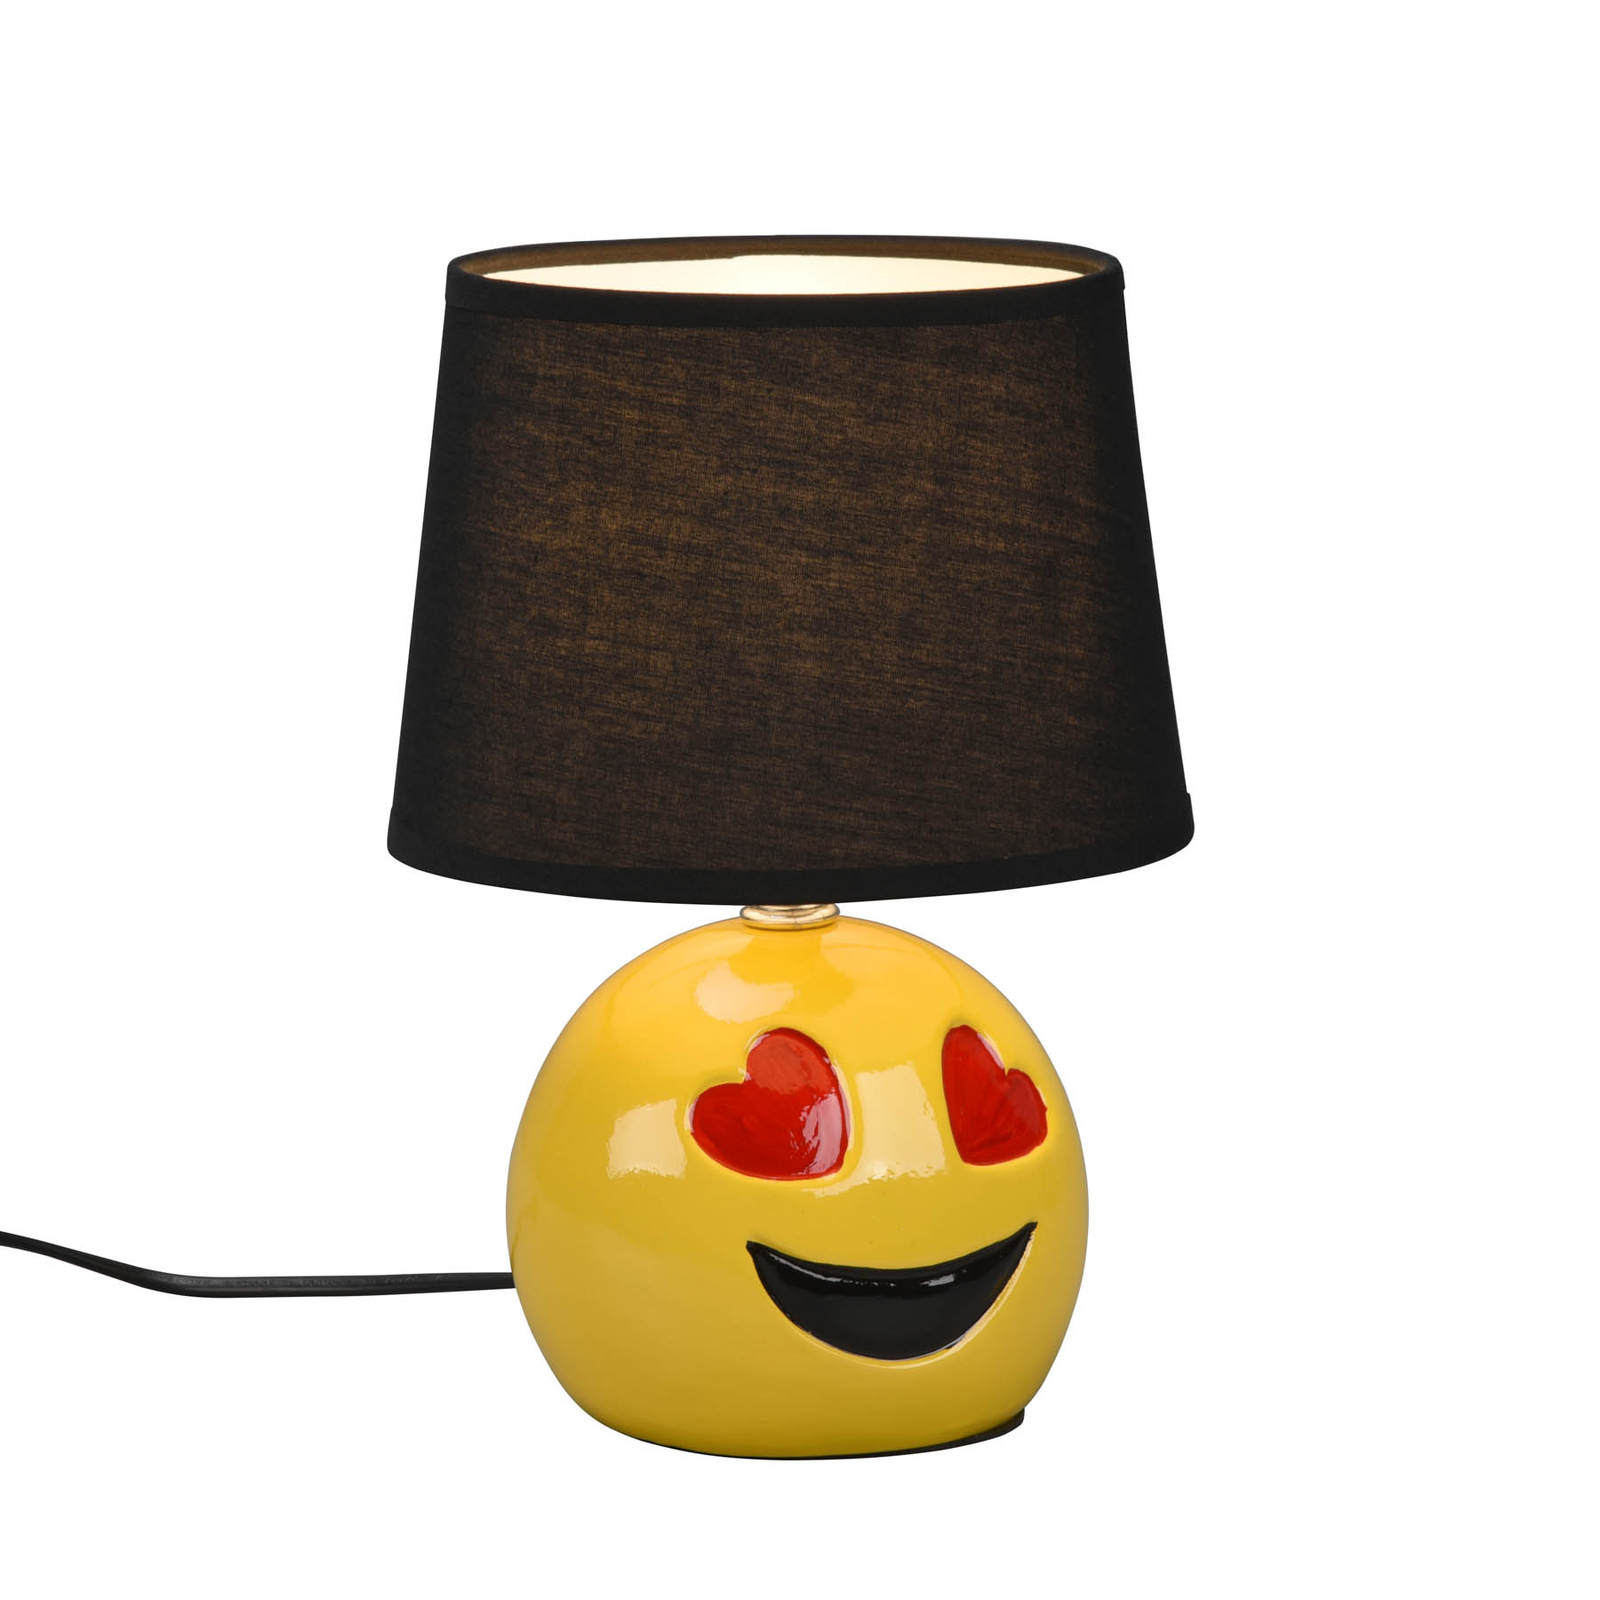 Tafellamp Lovely met Smiley, stoffen kap zwart